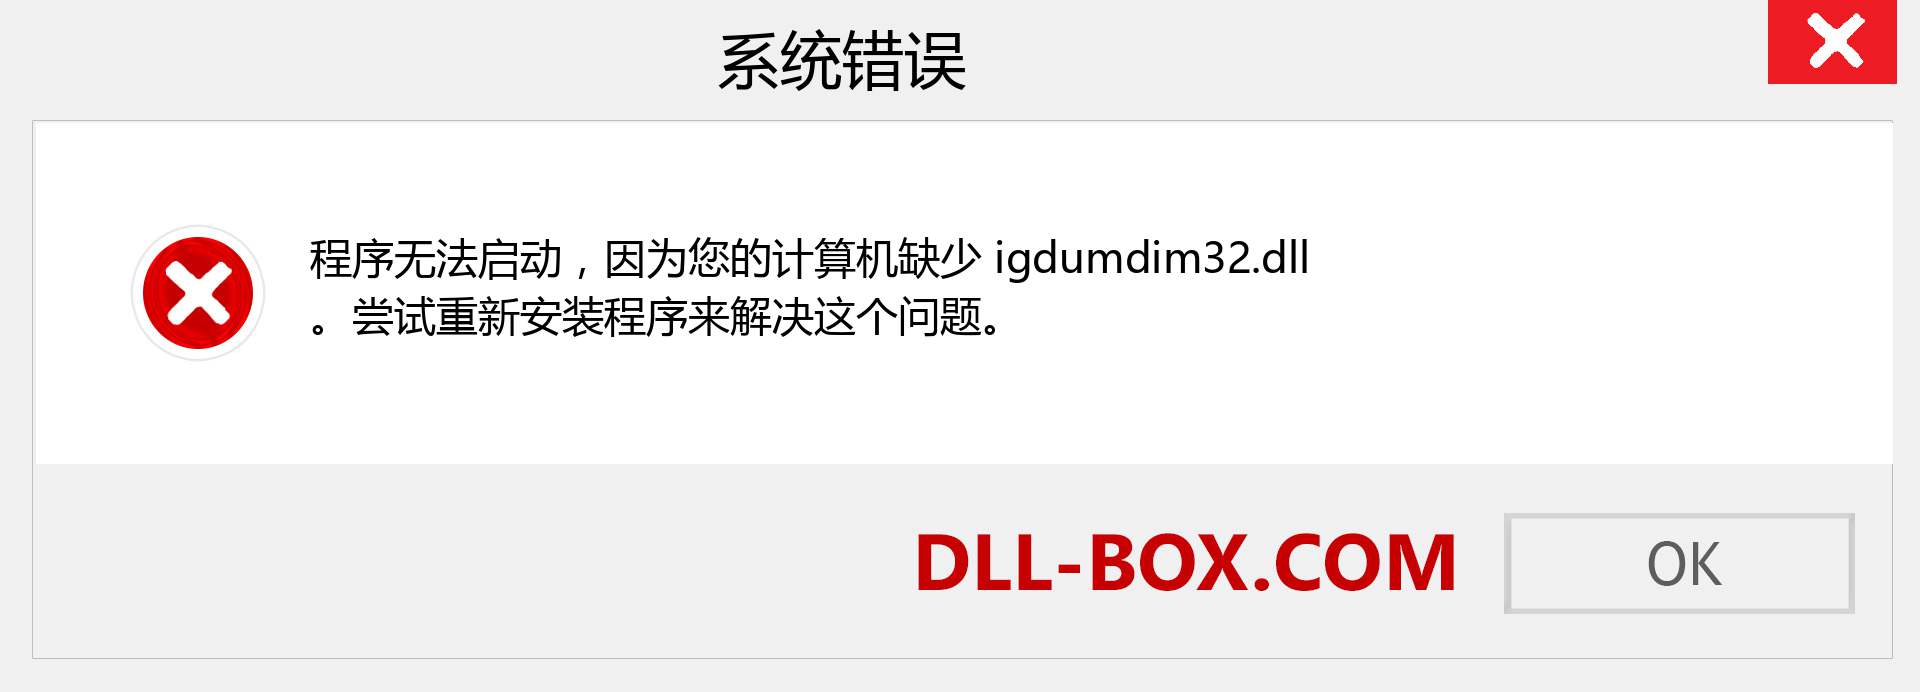 igdumdim32.dll 文件丢失？。 适用于 Windows 7、8、10 的下载 - 修复 Windows、照片、图像上的 igdumdim32 dll 丢失错误